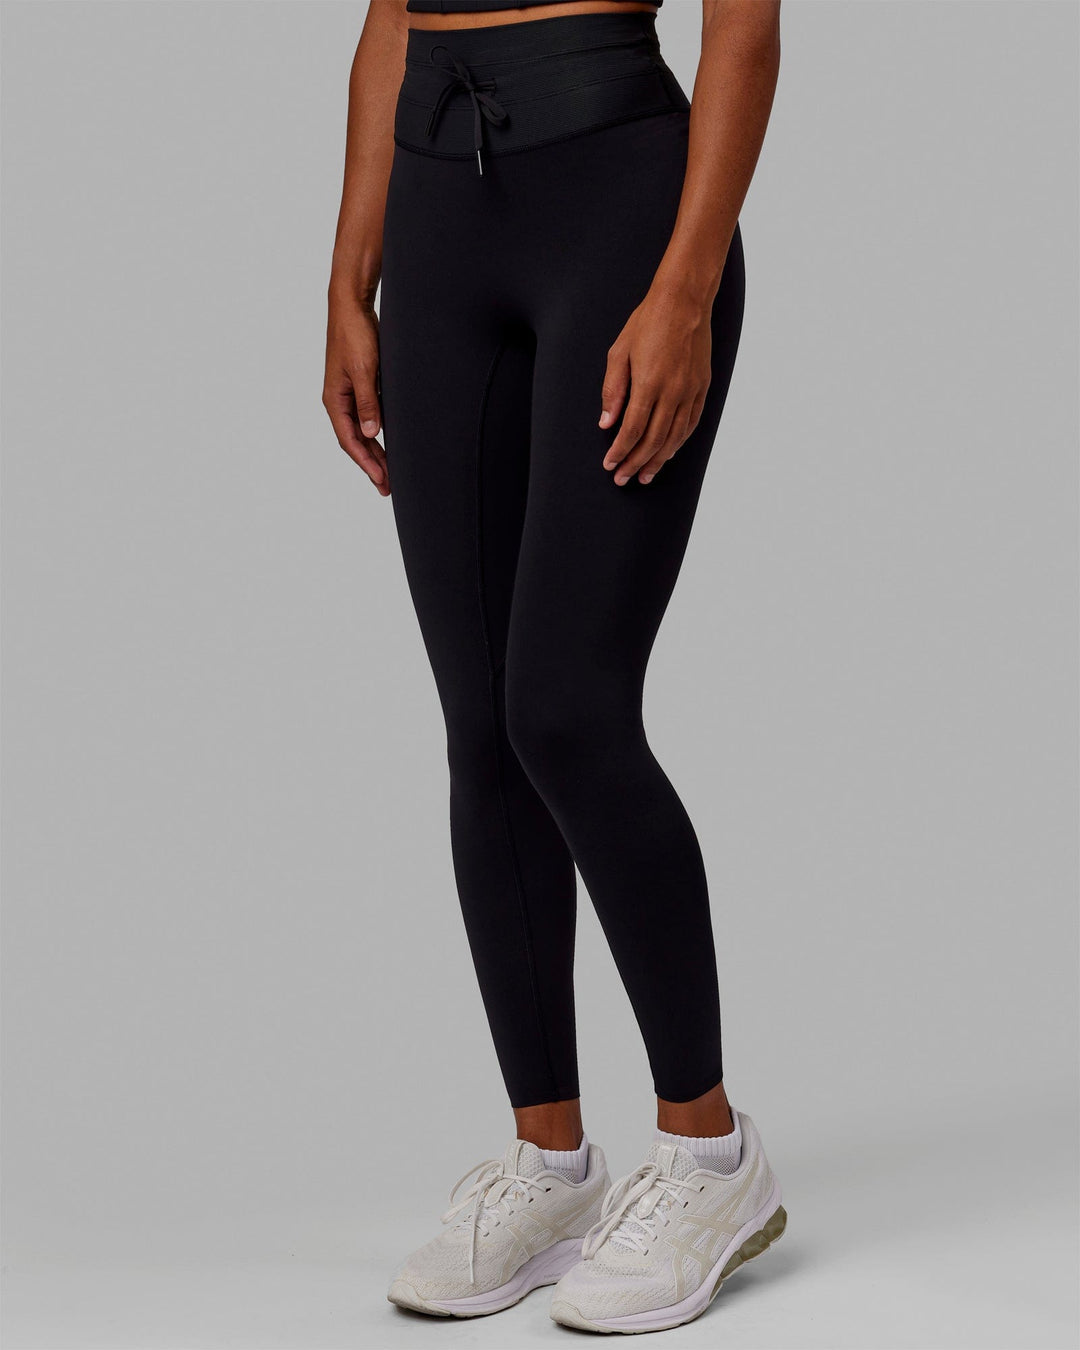 Woman wearing Resistance Full Length Leggings - Black